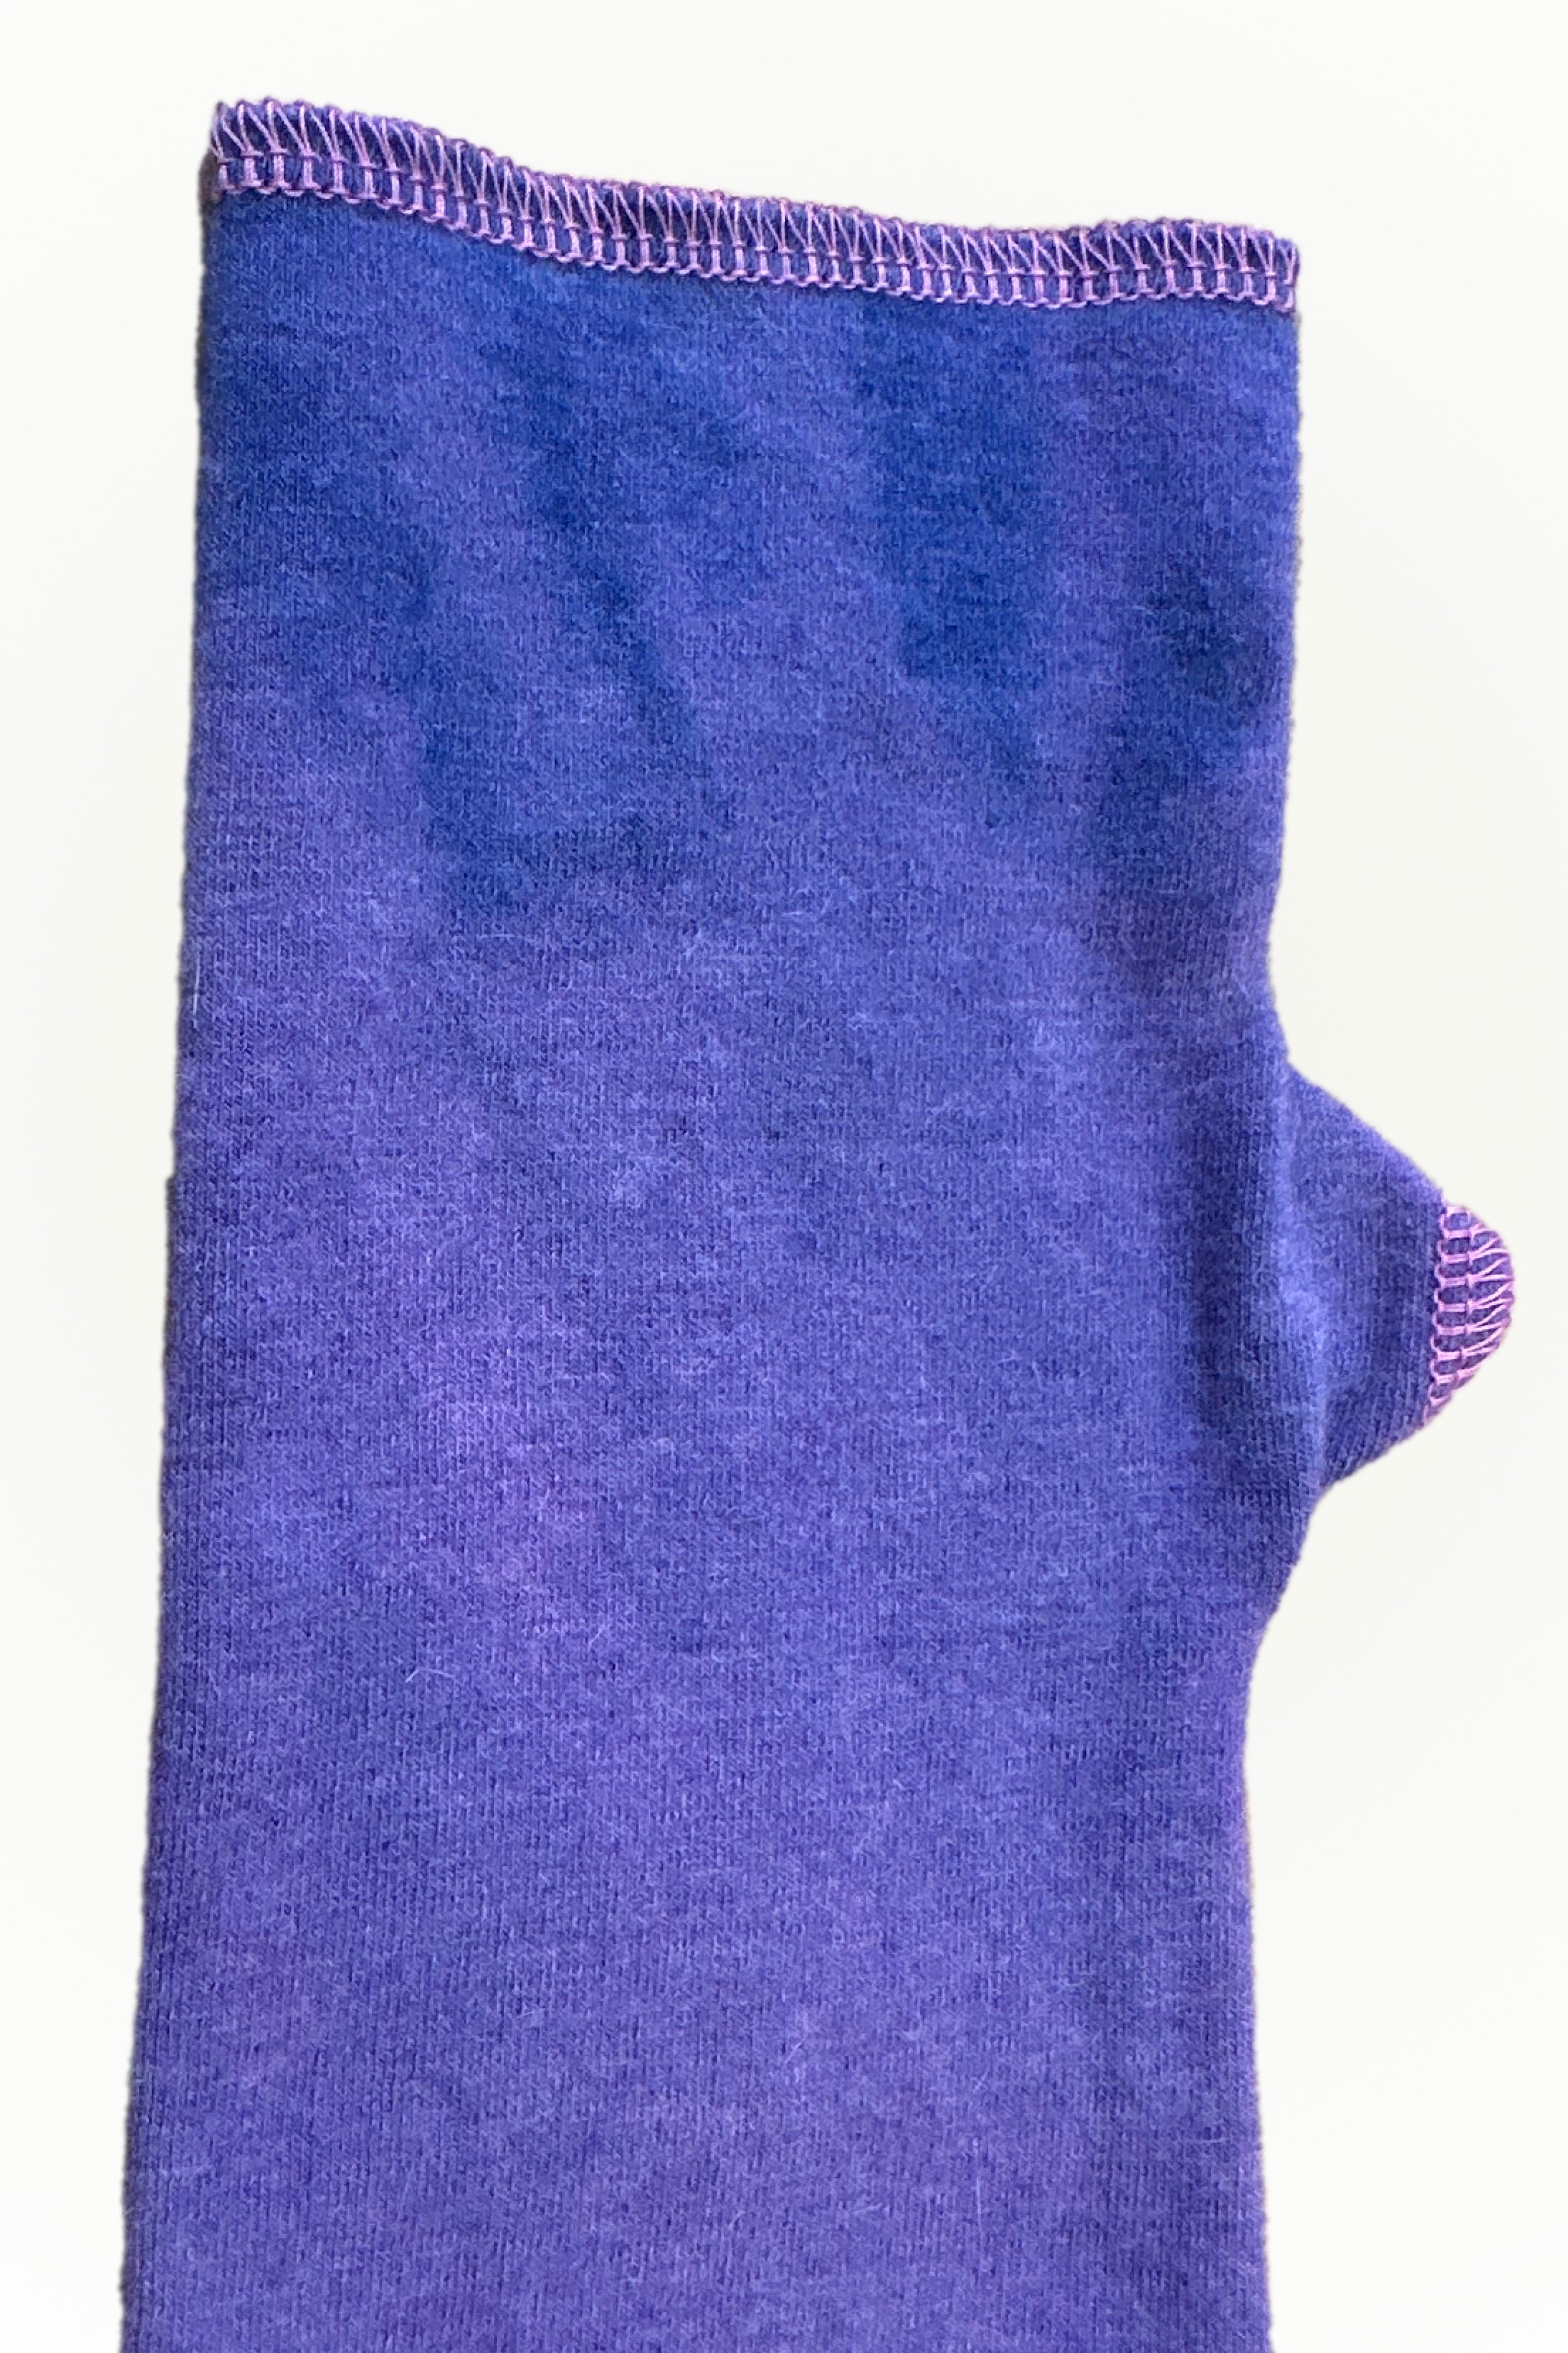 Merino Fingerless Gloves - Purple w/ Pink Serged Hem